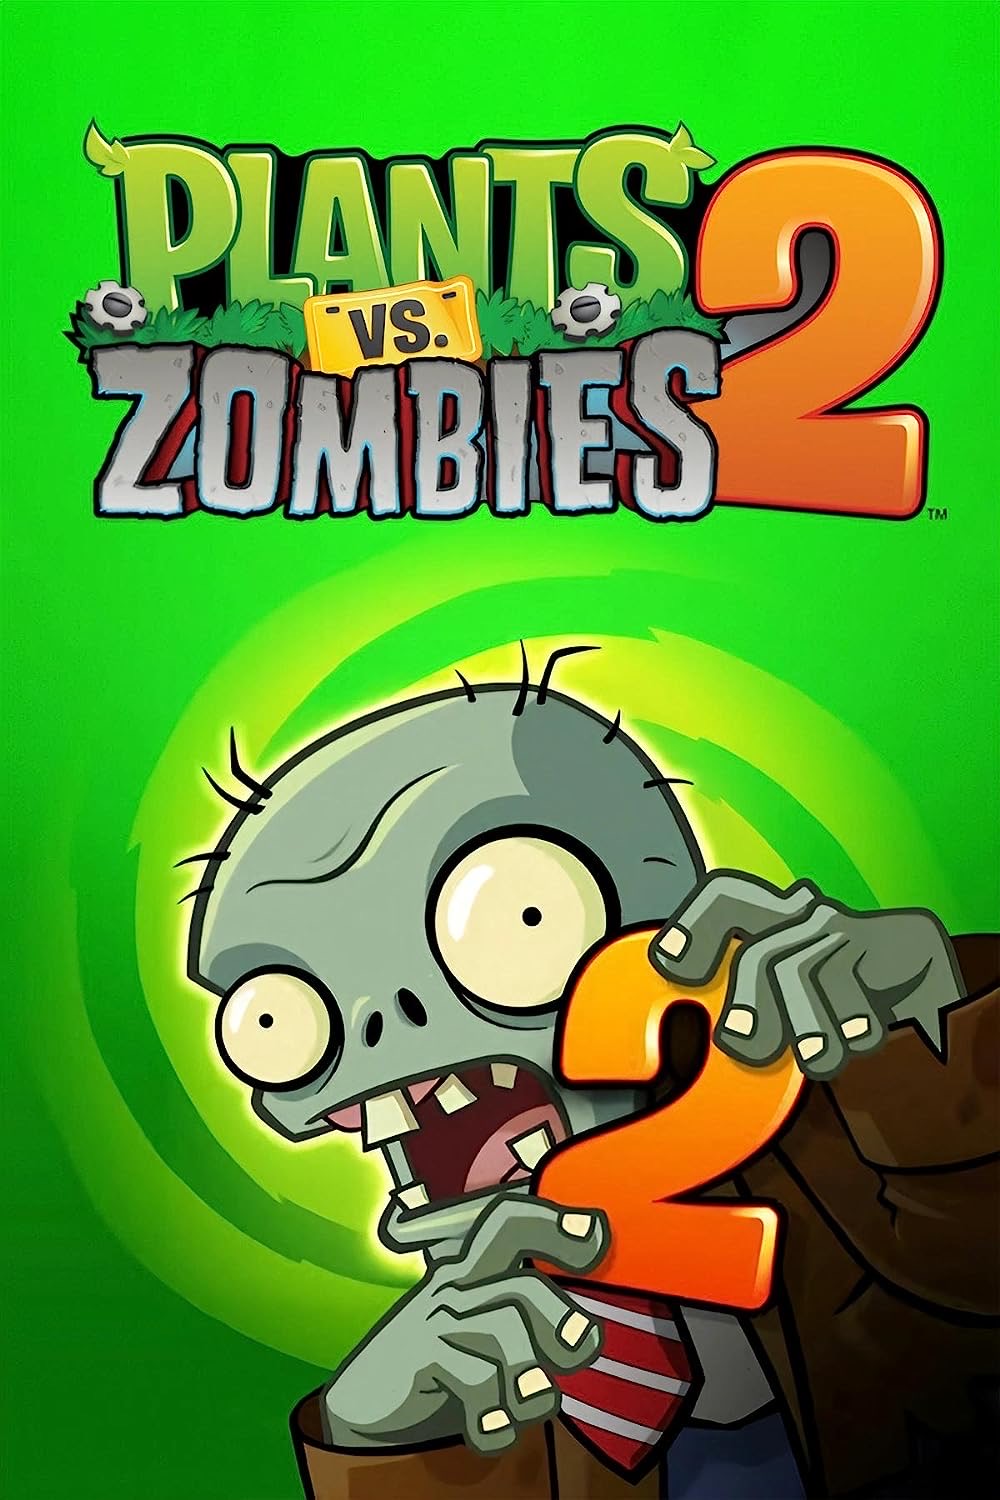 Happy 10th Anniversary Plants vs. Zombies